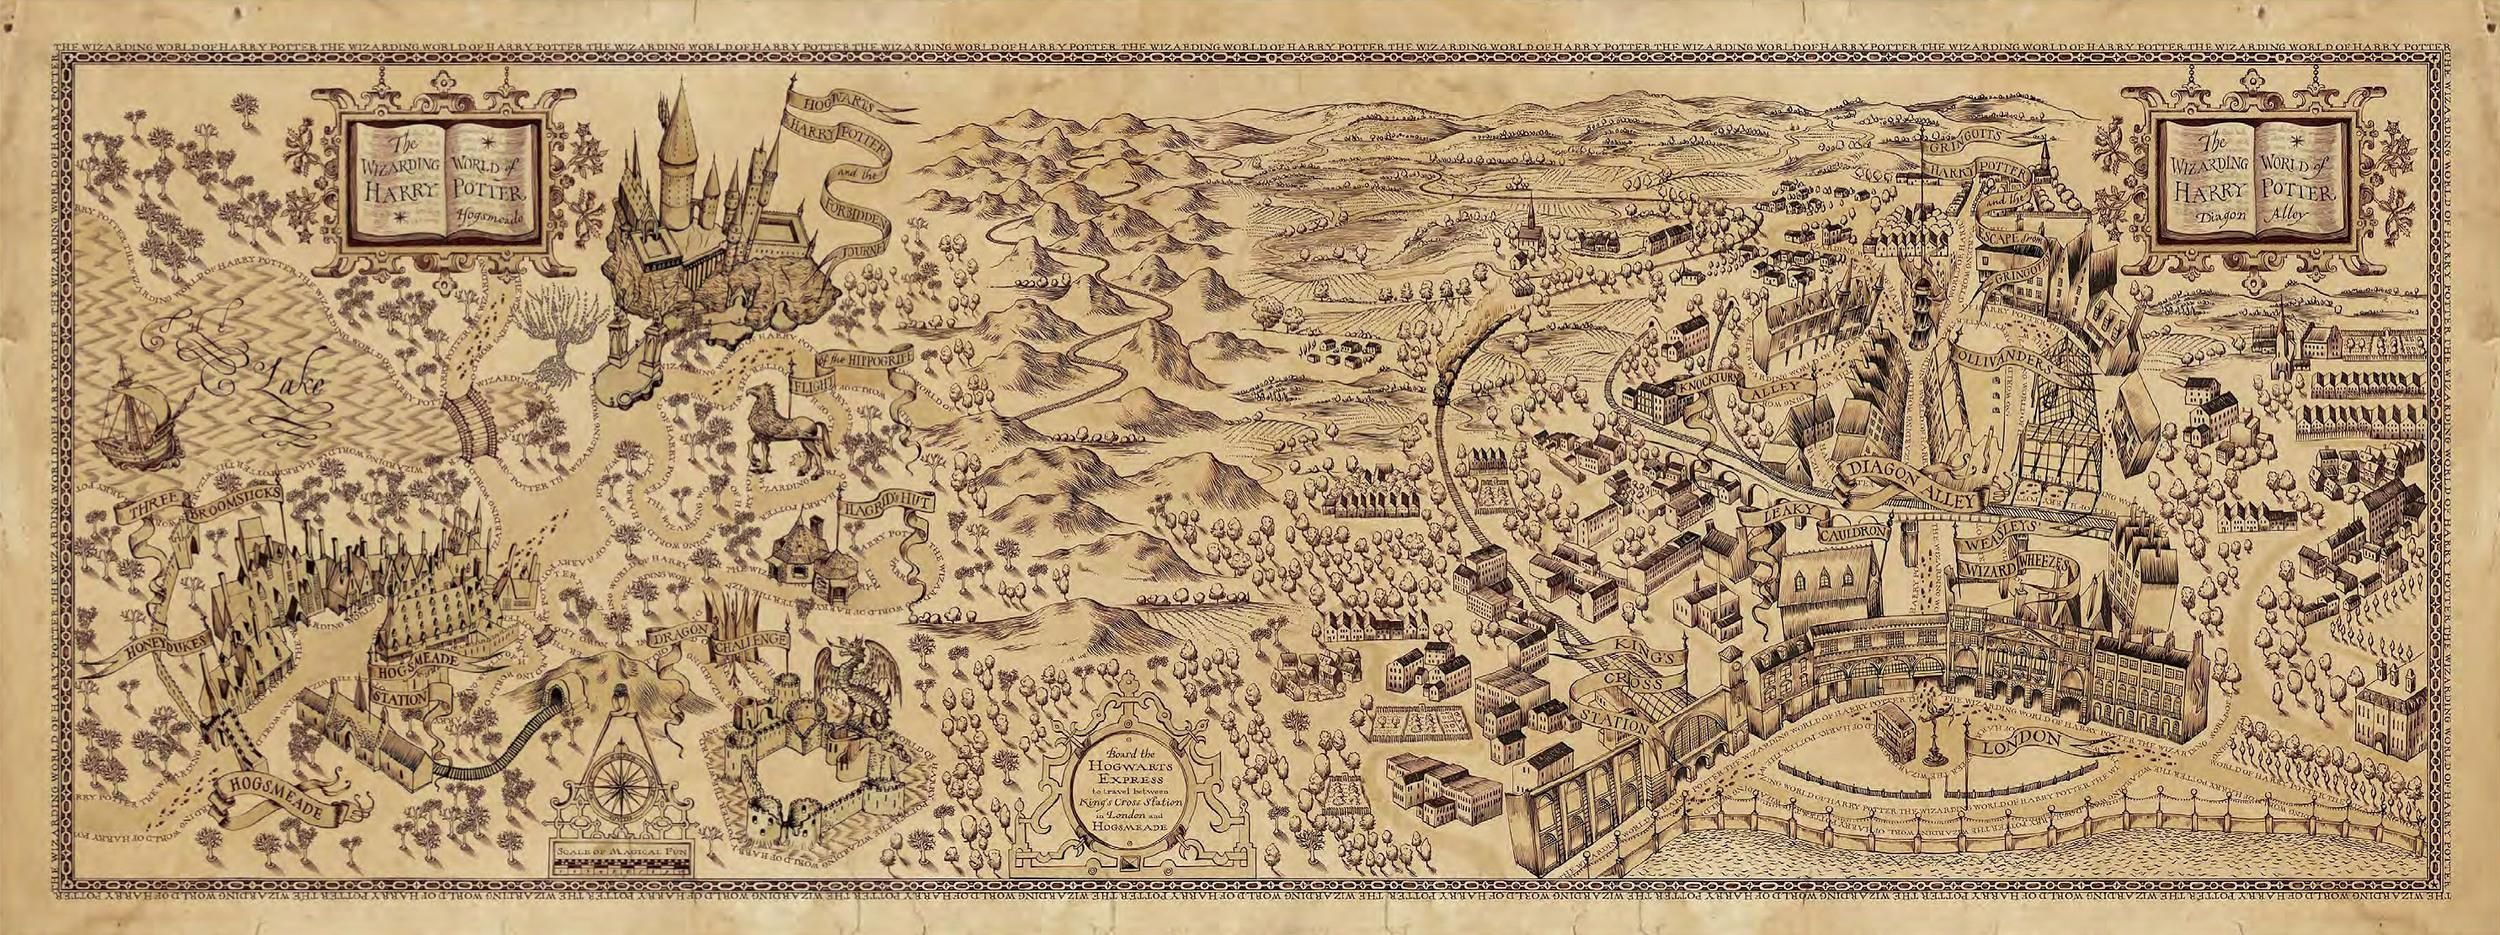 Harry Potter World Map Universal Studios New Of